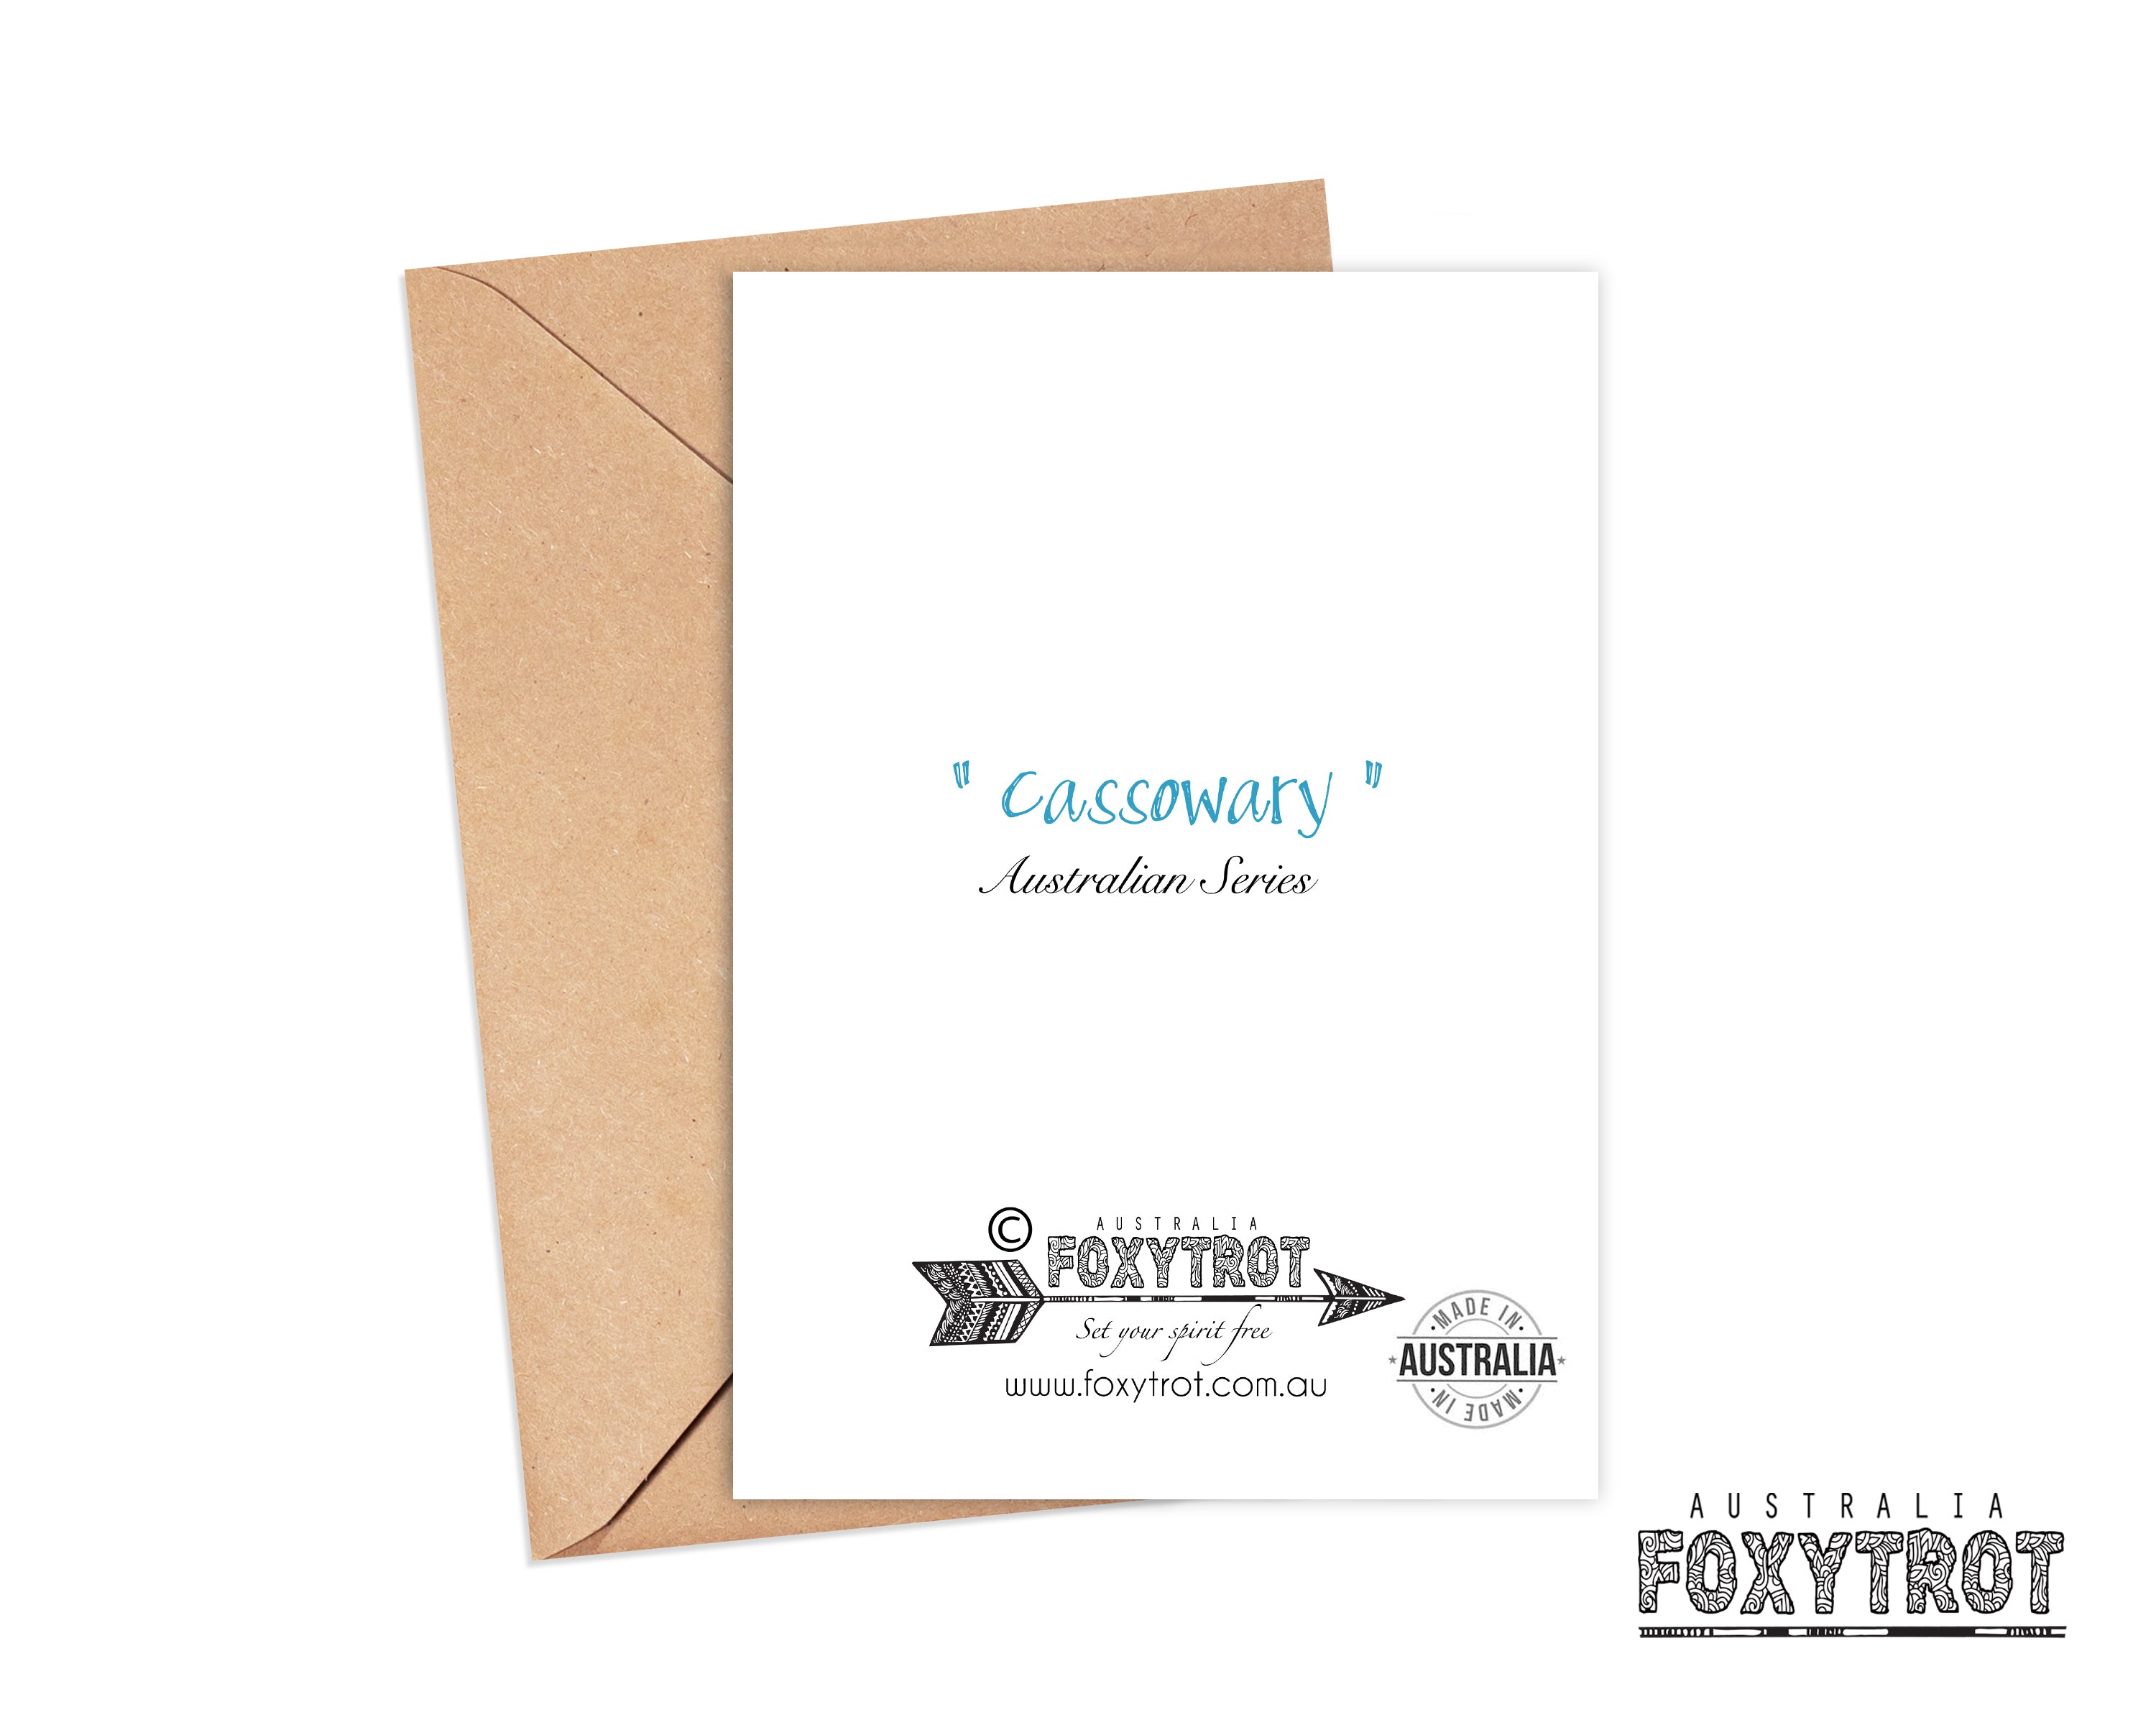 Cassowary Card